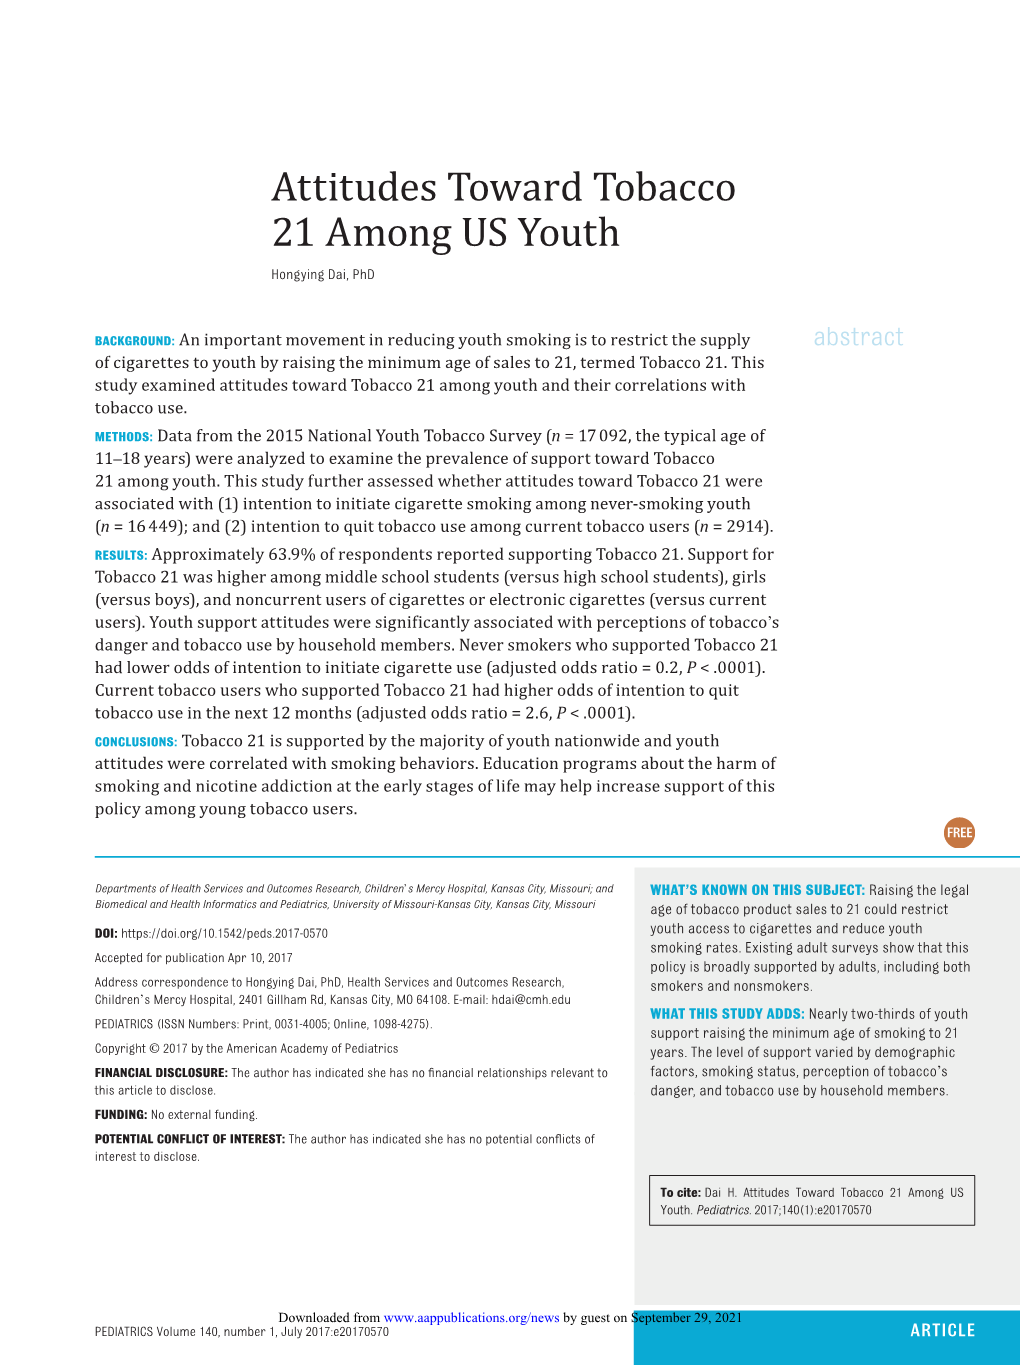 Attitudes Toward Tobacco 21 Among US Youth